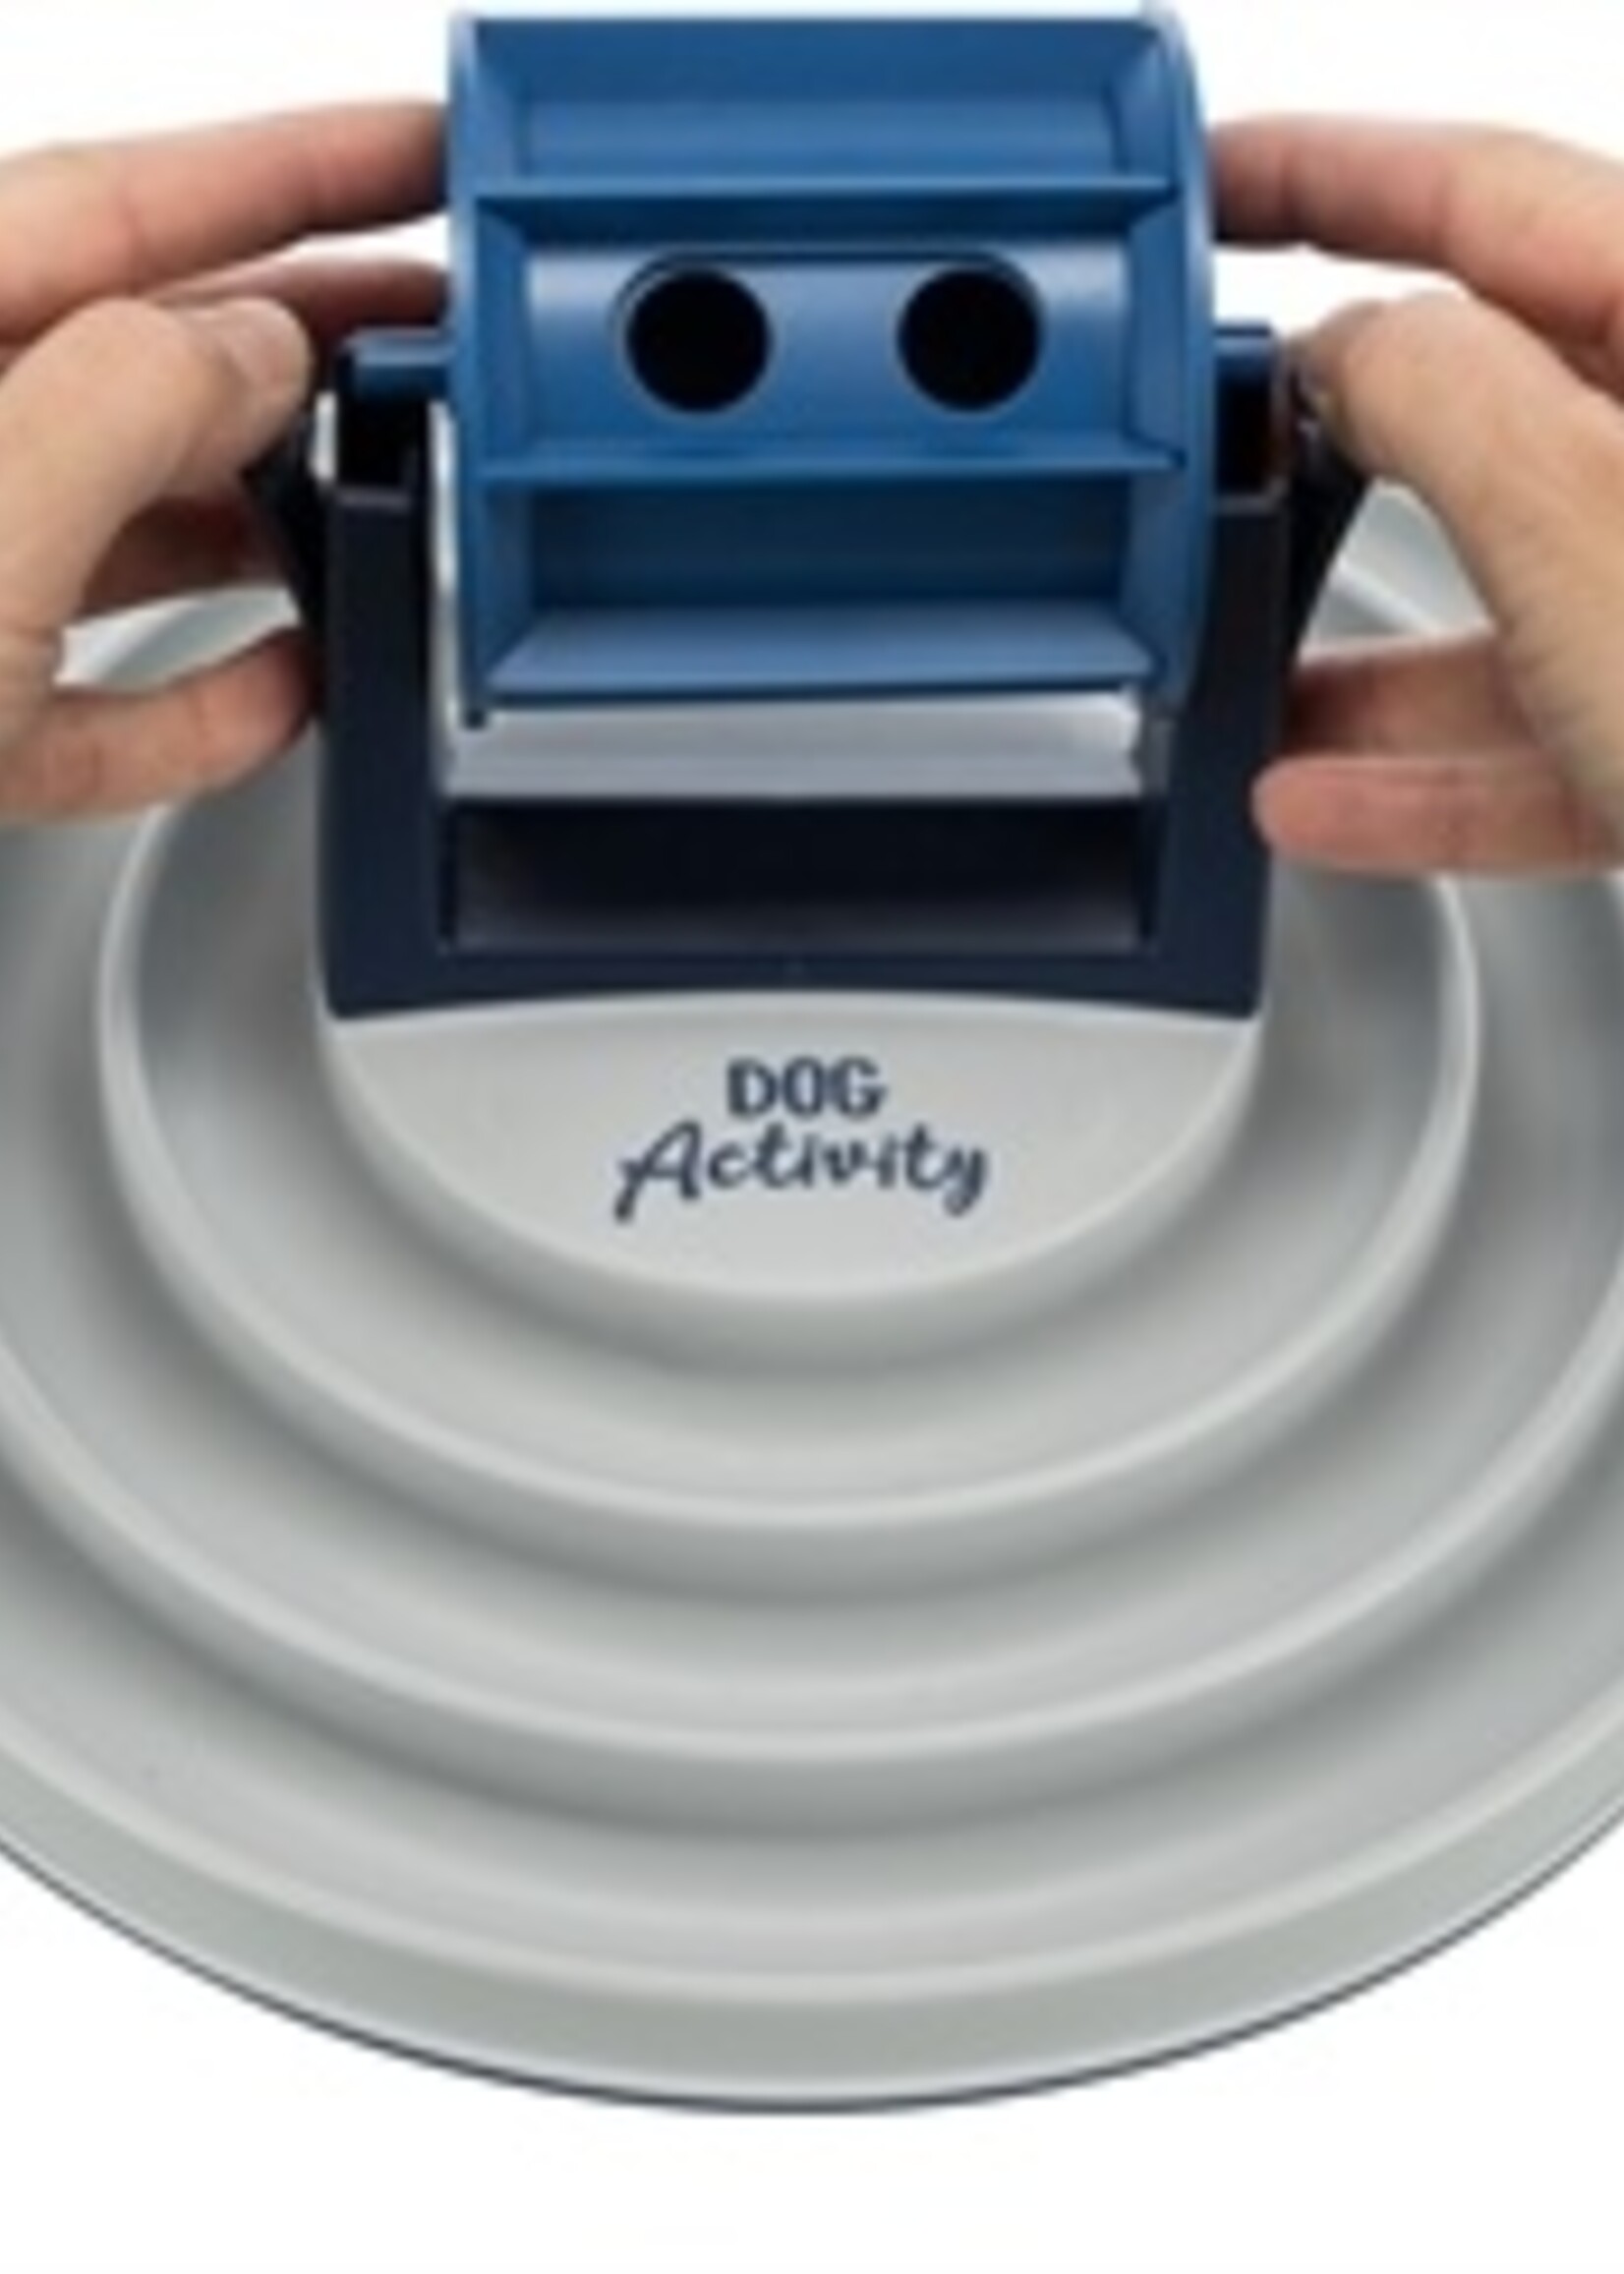 Trixie Trixie dog activity roller bowl